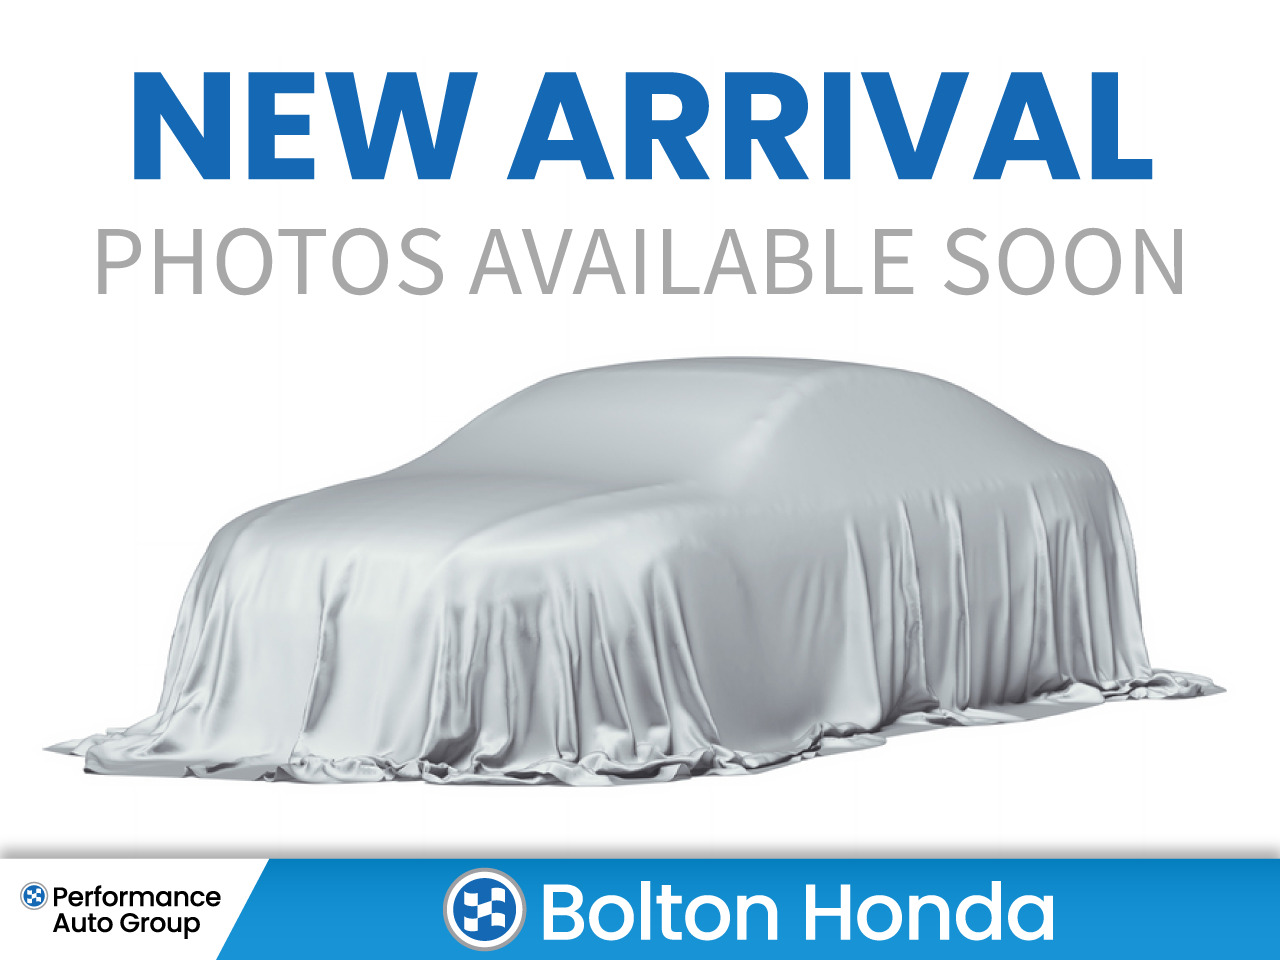 2022 Honda Civic Sedan LX CVT | CLEAN CF | HONDA CERTIFIED SERIES! 